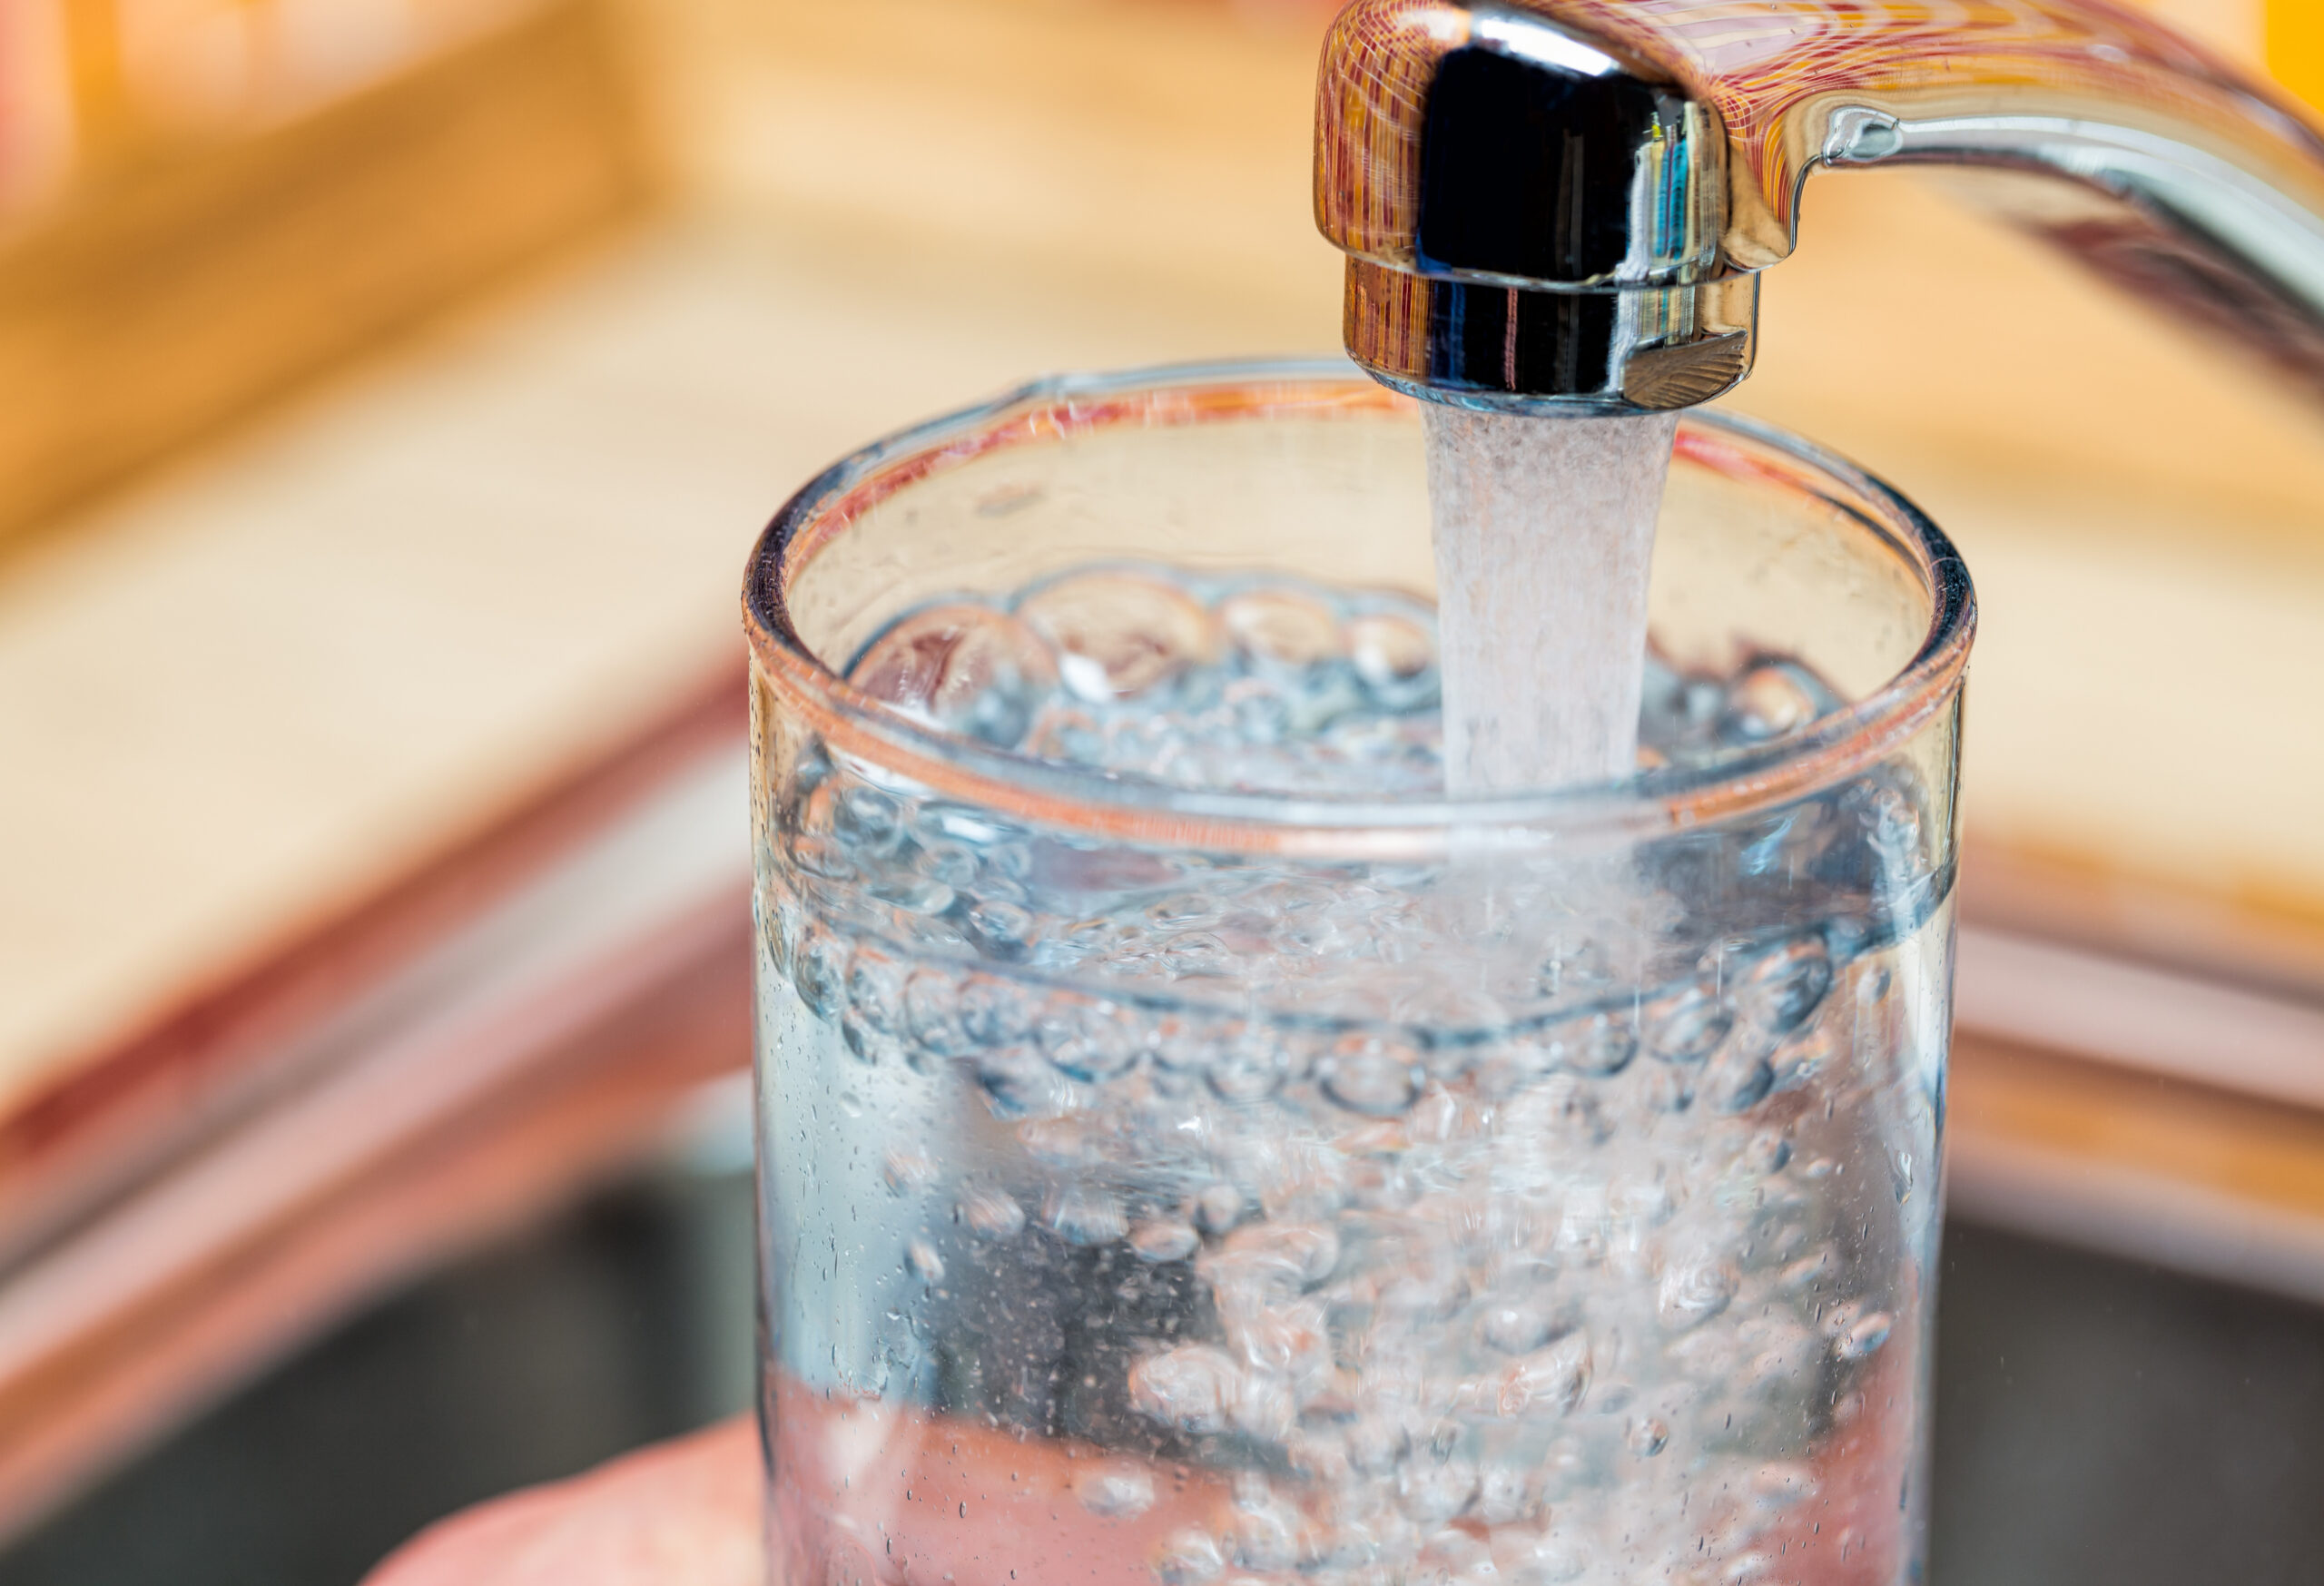 San Francisco Trial On Fluoride In Drinking Water